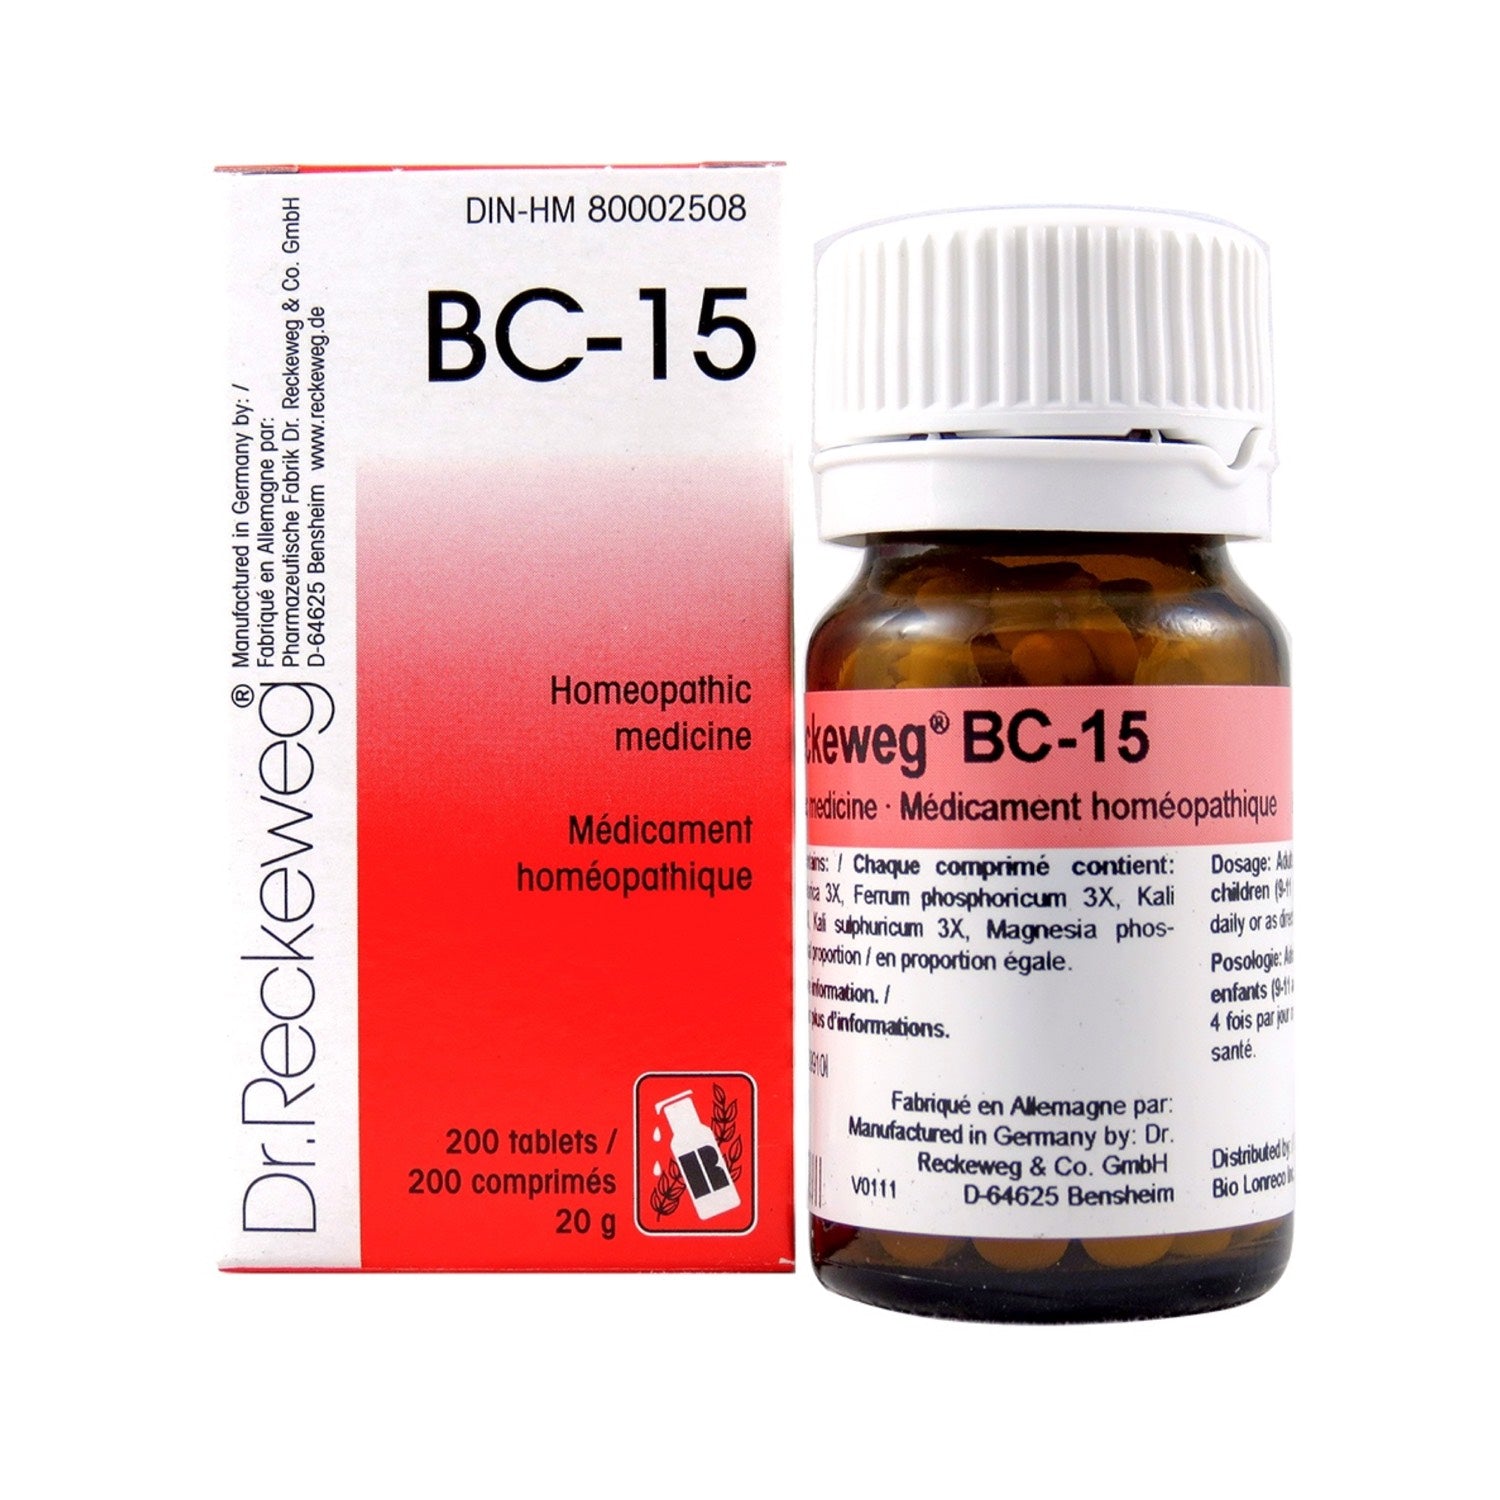 BC-15 Homeopathic medicine – Combination salt  200 tablets (20 g) - iwellnessbox